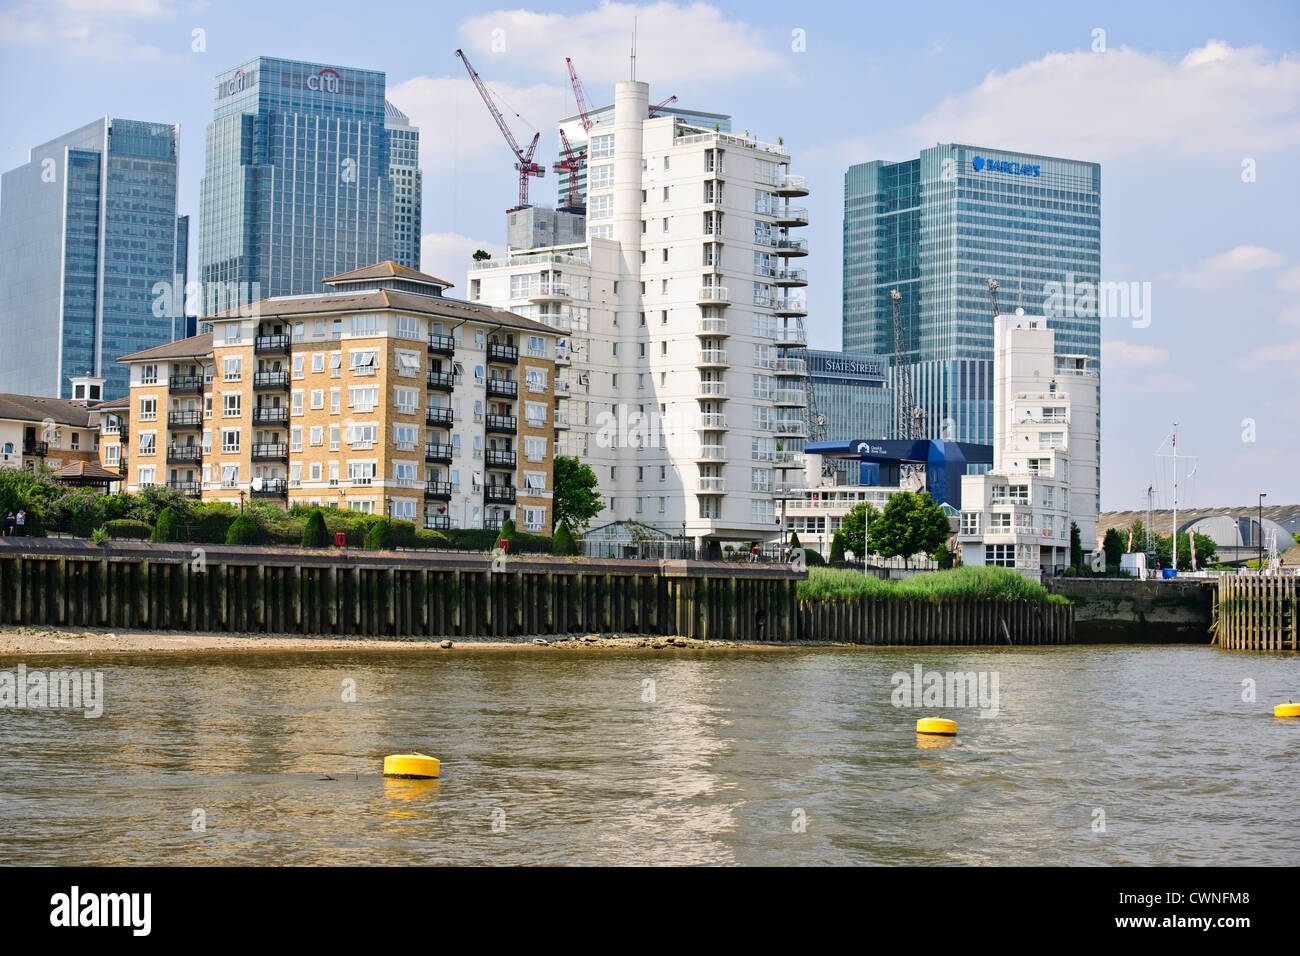 Canary Wharf, HSBC, Barclays, Citi Group Gebäude, West India Dock, Dockland, Finanz-Hauptstadt der Welt, London, UK, Großbritannien Stockfoto